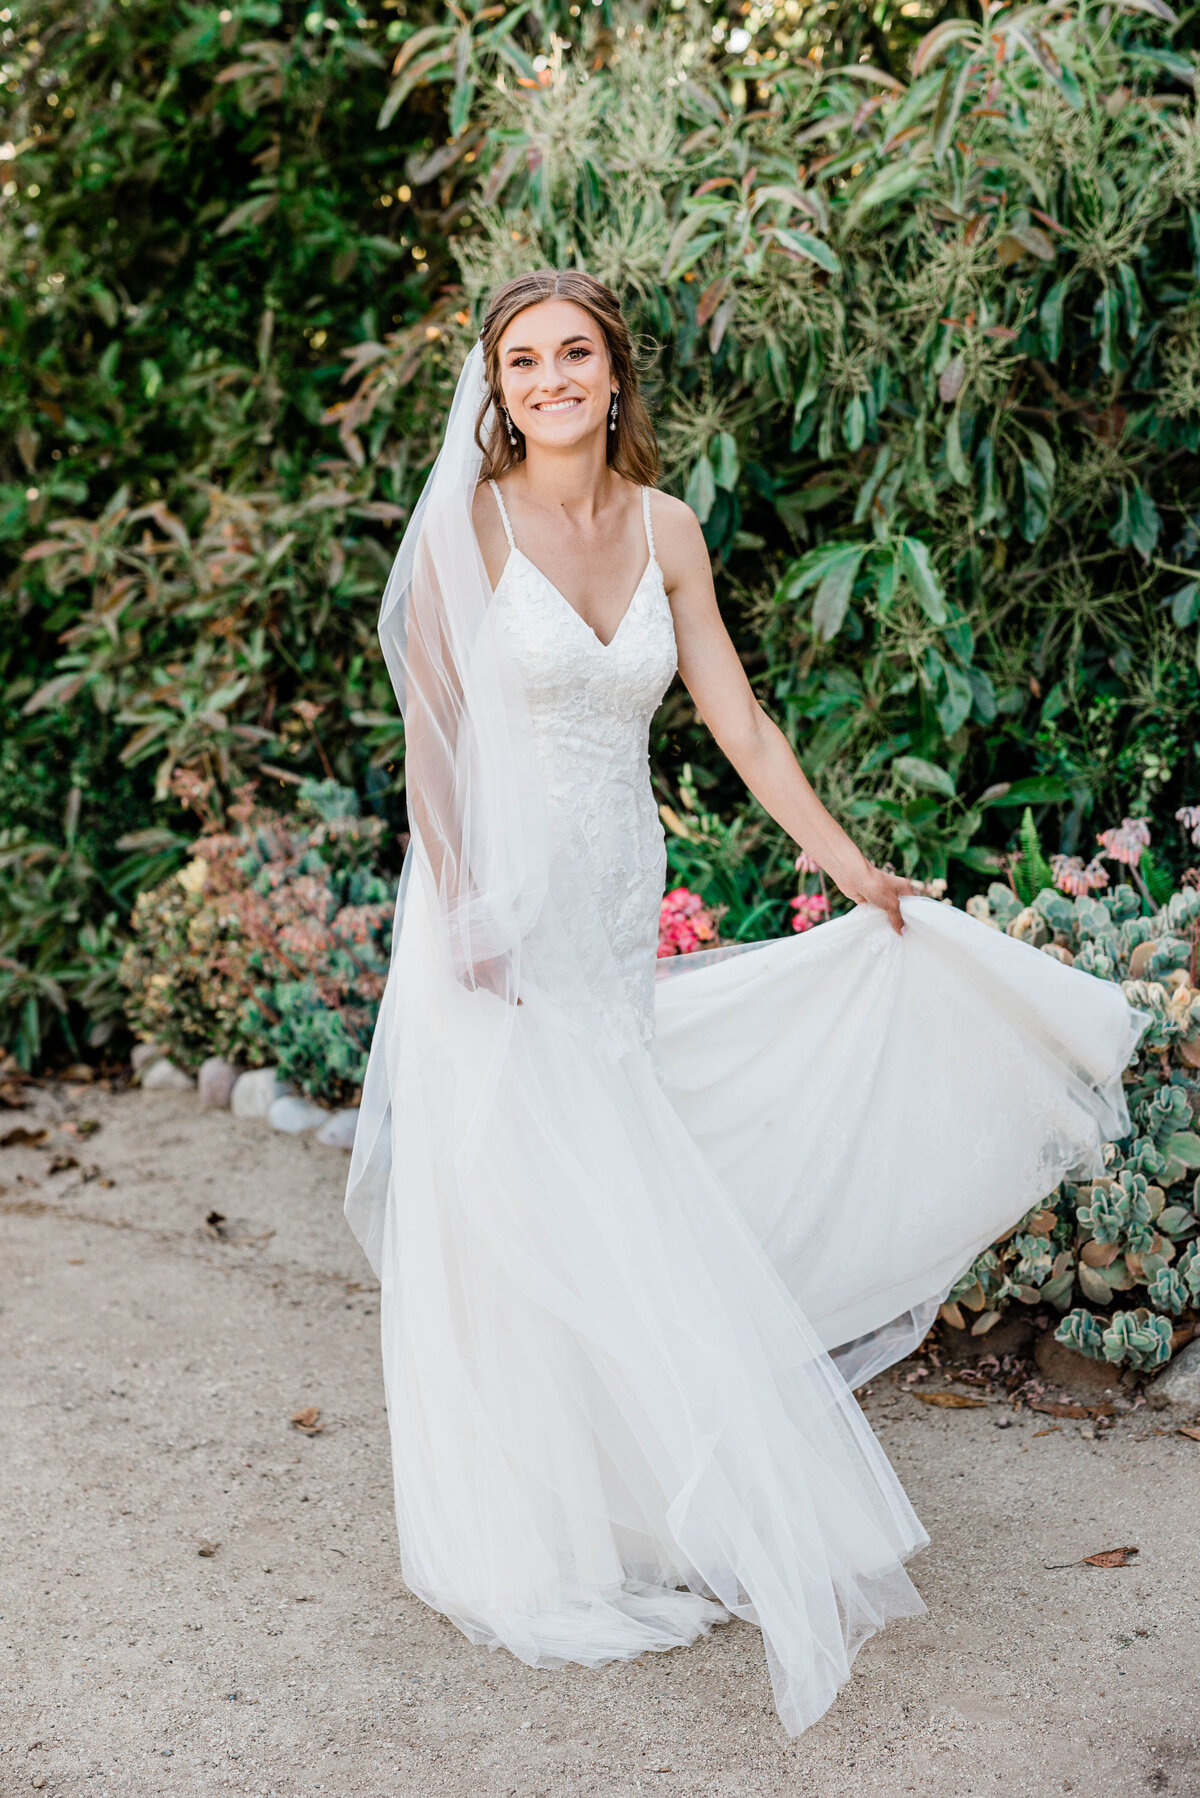 A bride in her wedding dress twirls with joy during her San Luis Obispo wedding day at a vineyard.